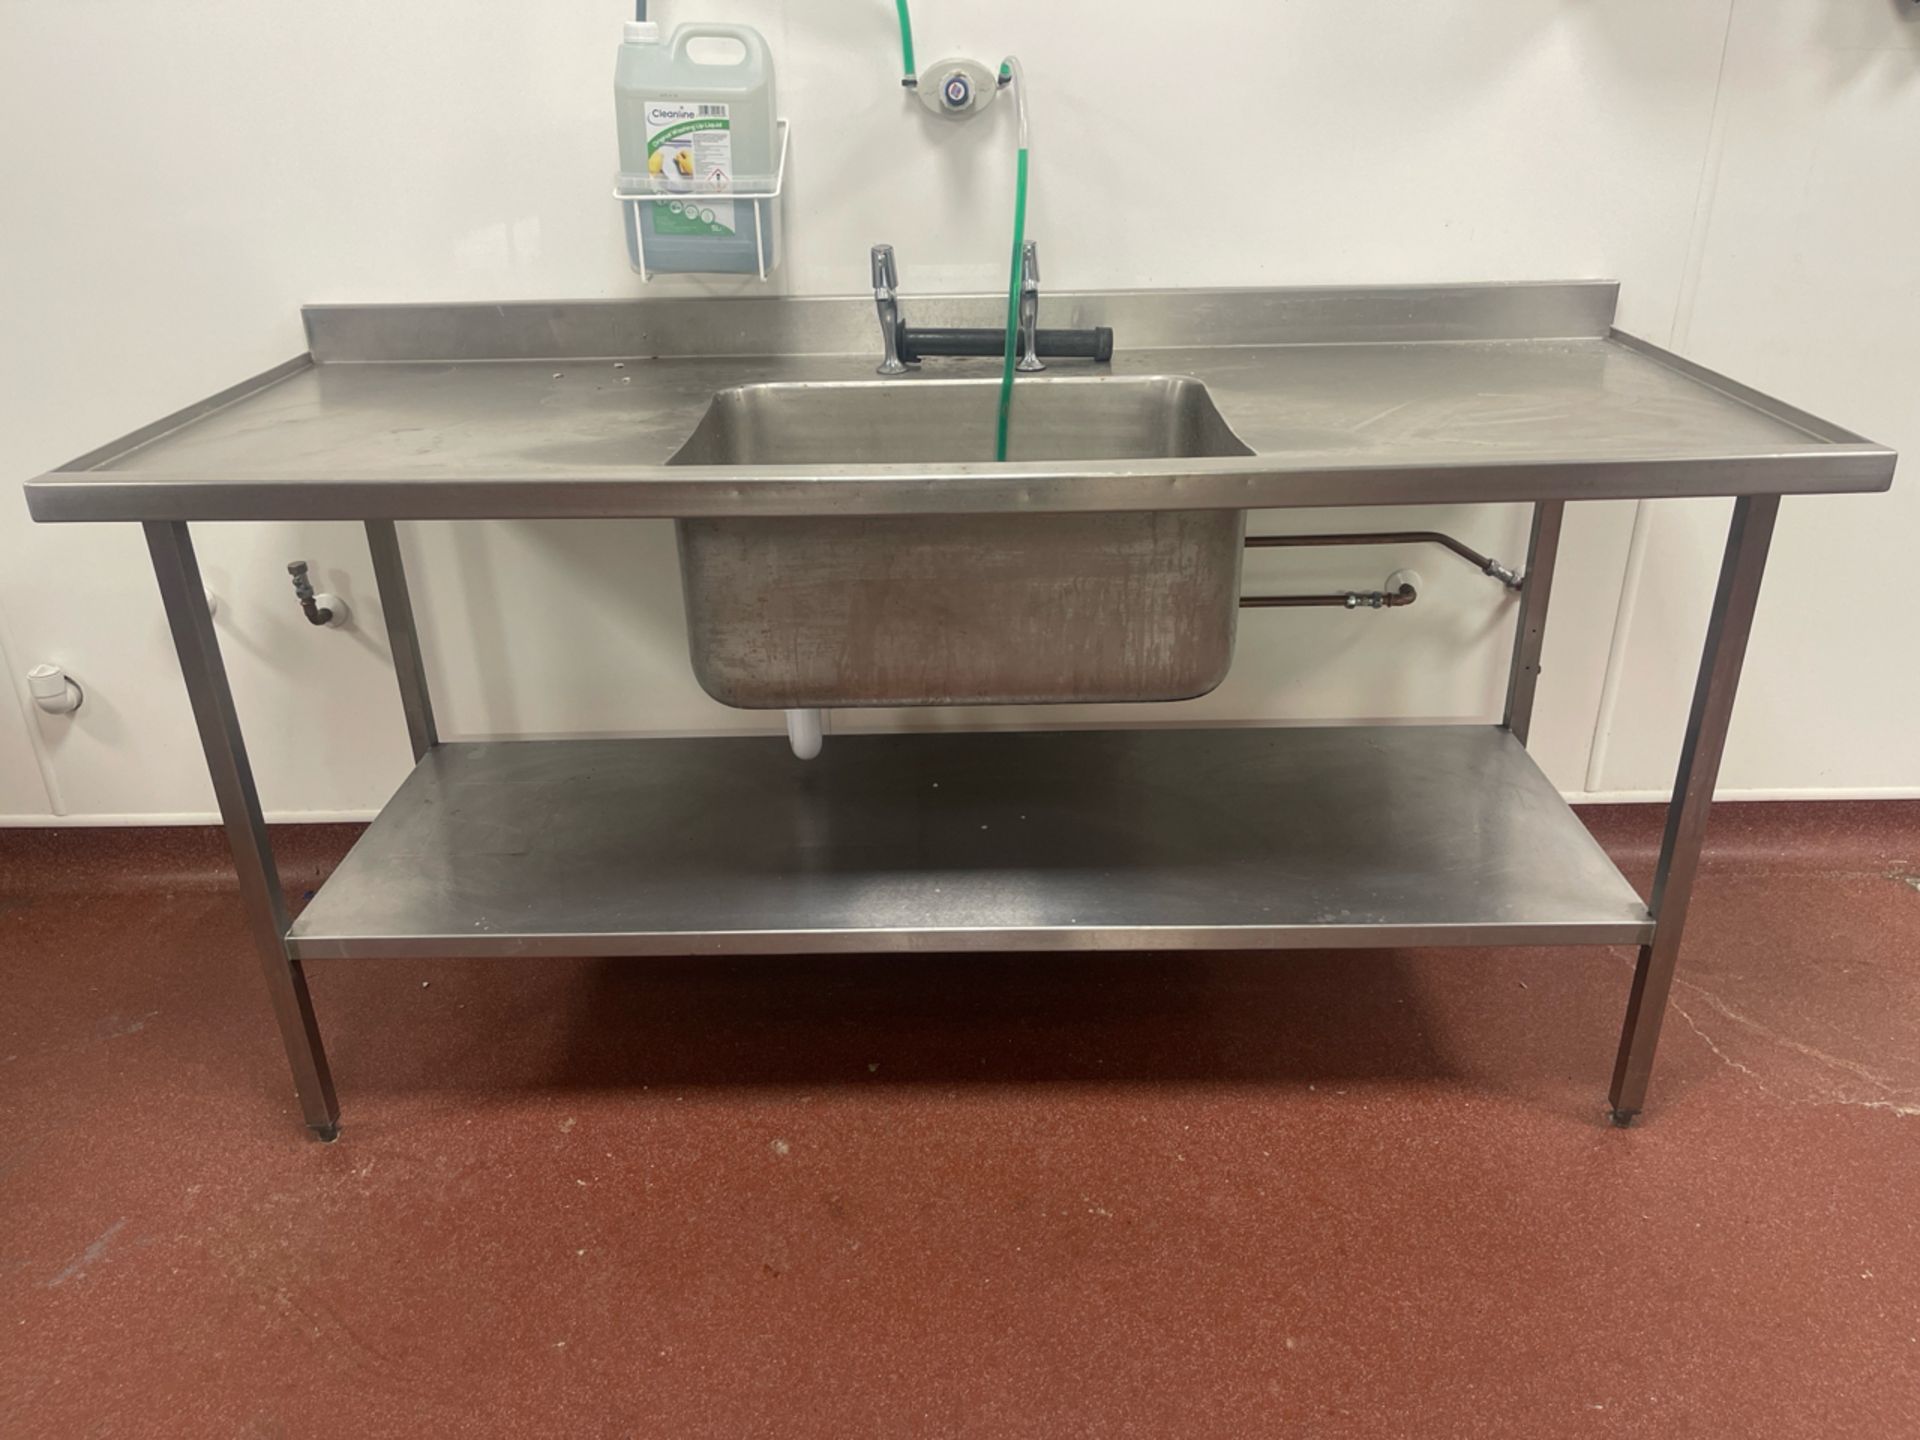 Stainless Steel Single Sink Unit